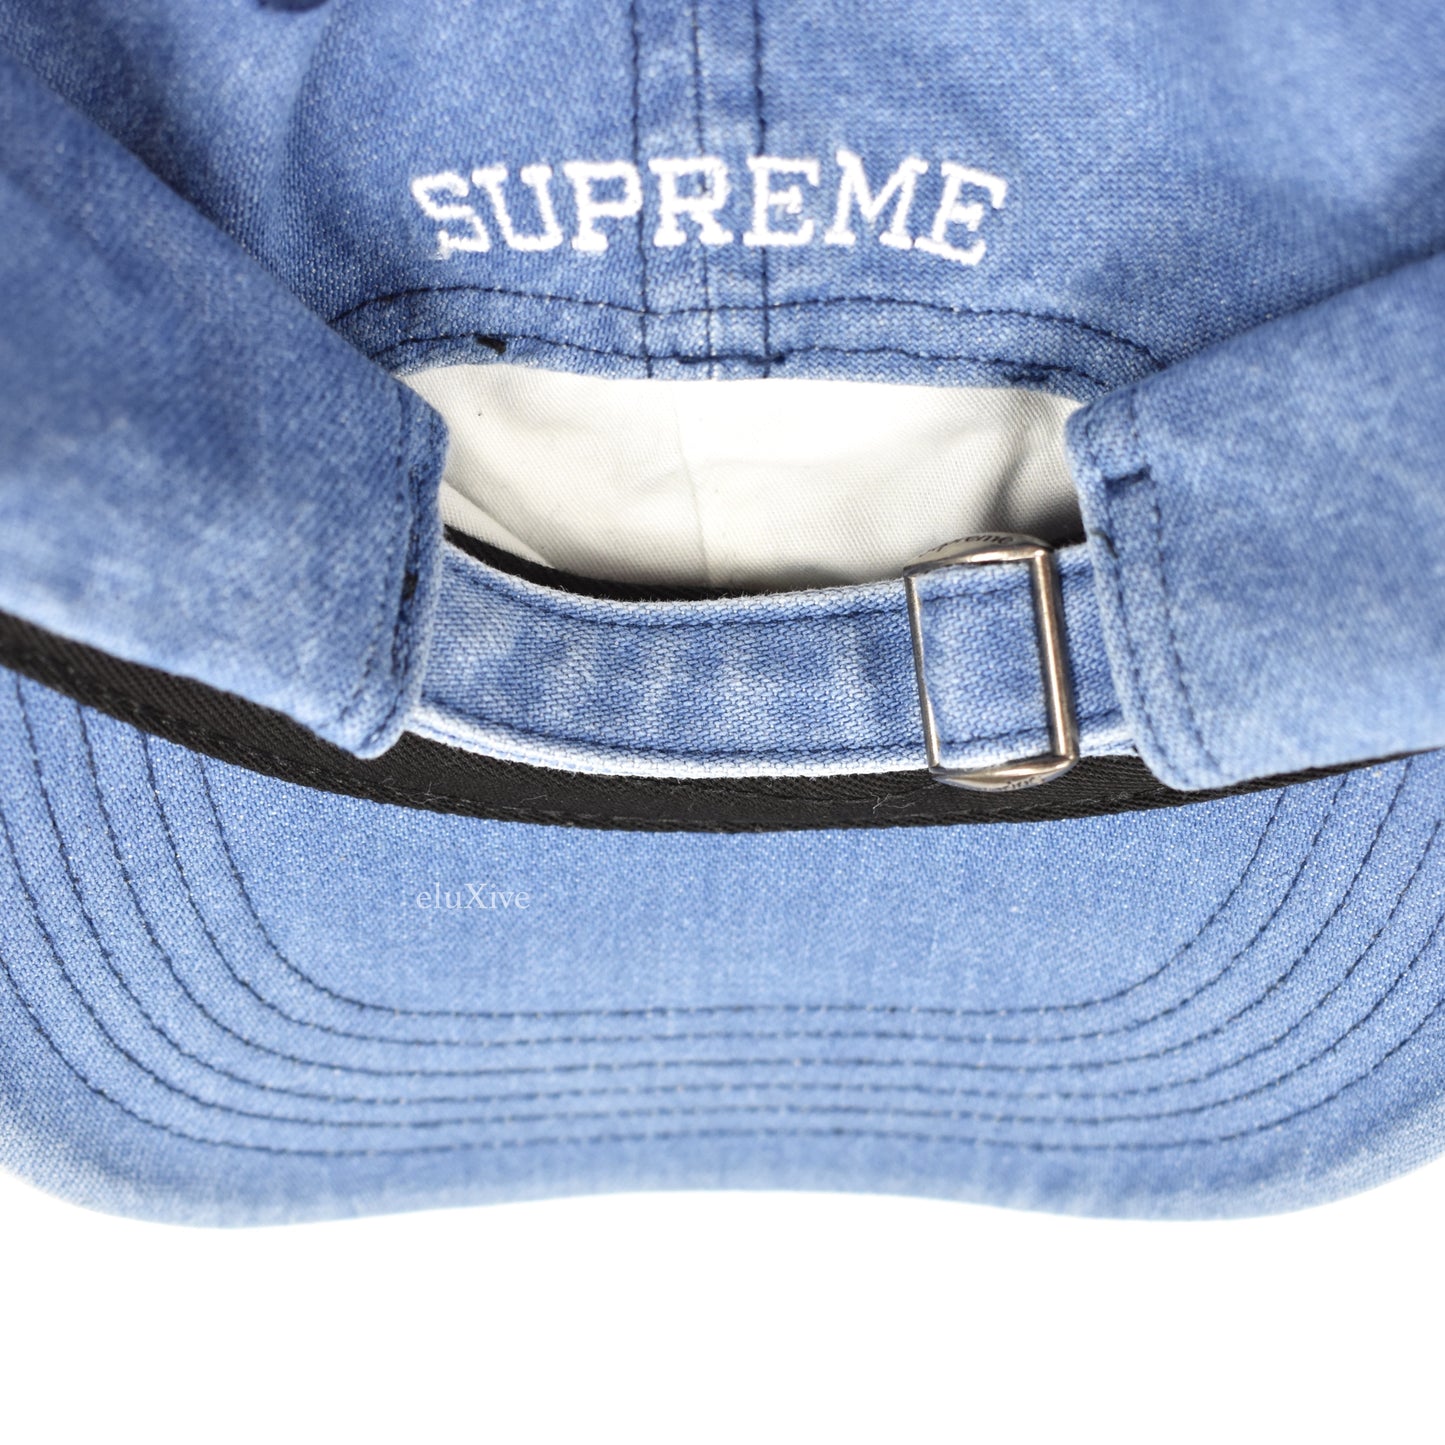 Supreme - Denim Interstate 94 Logo Hat (Blue)